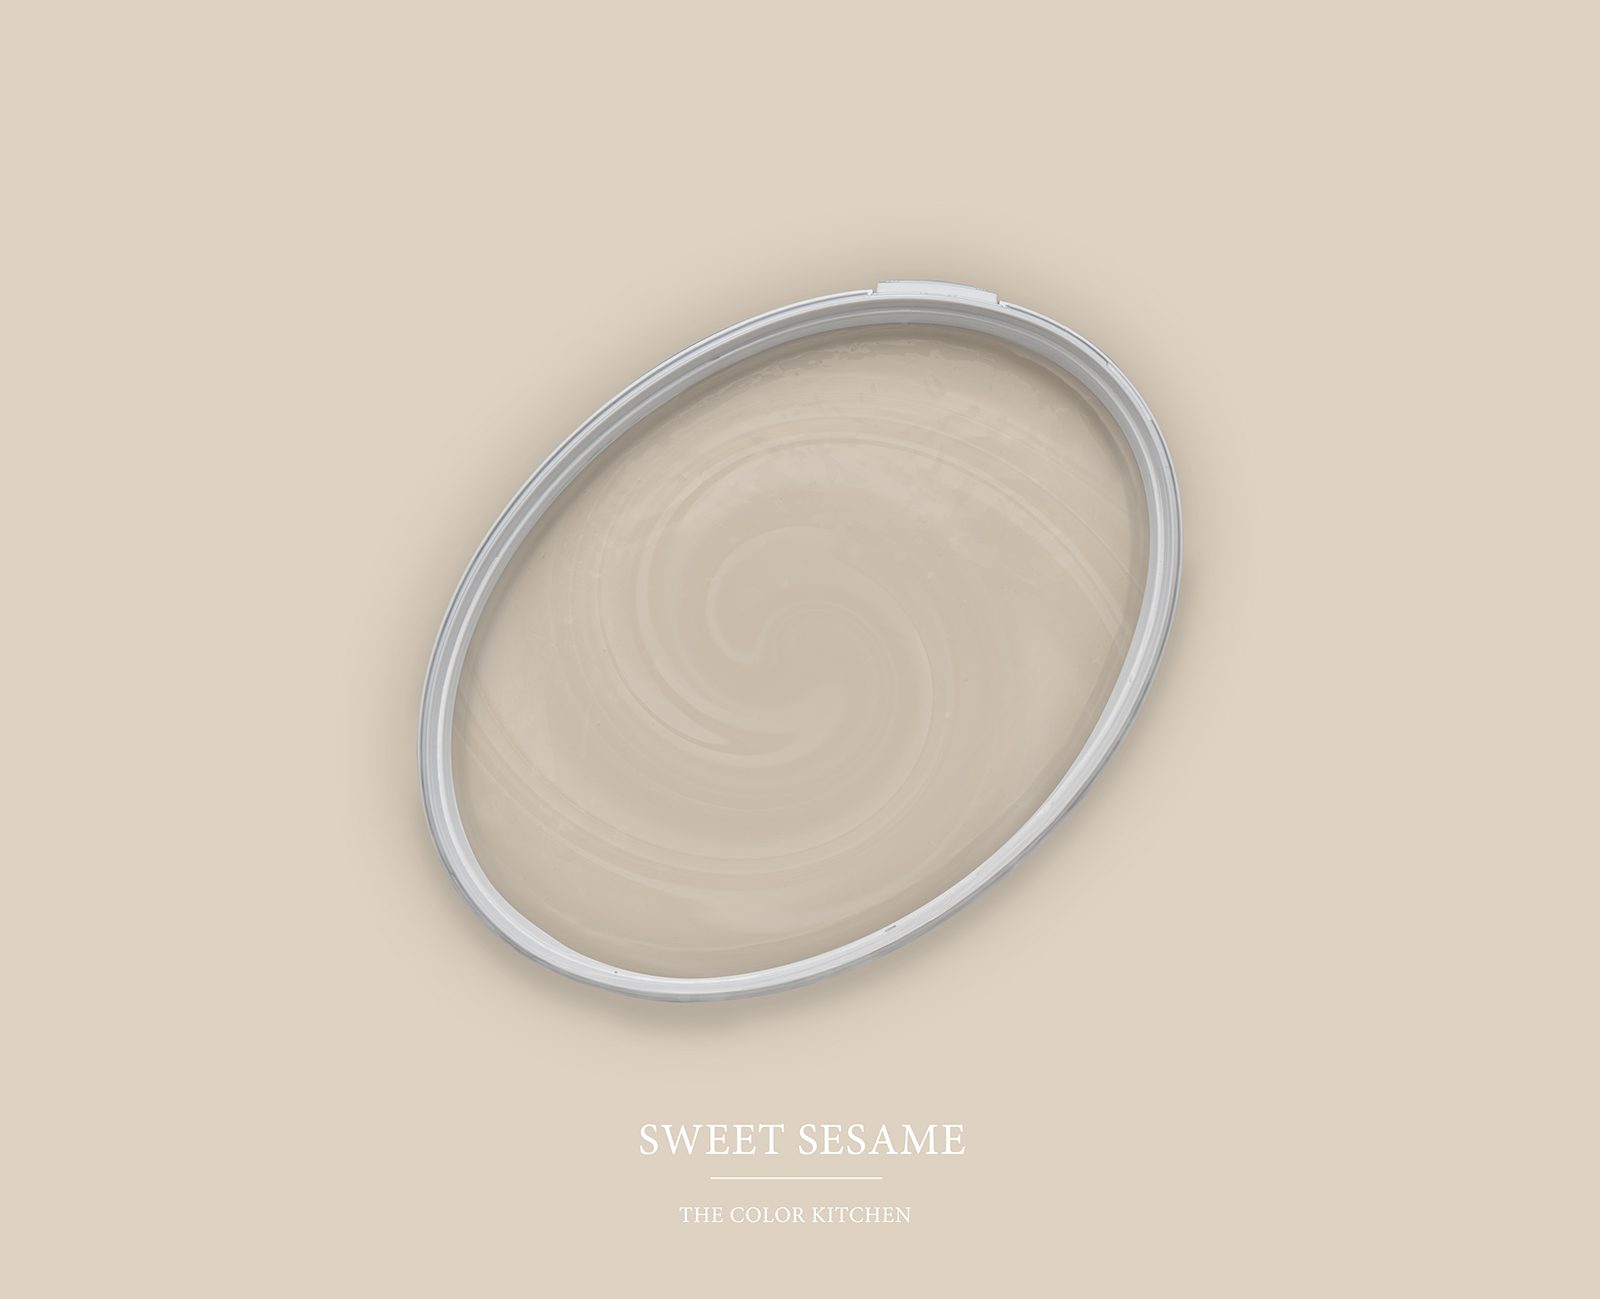         Wall Paint TCK6000 »Sweet Sesame« in timeless beige – 2.5 litre
    